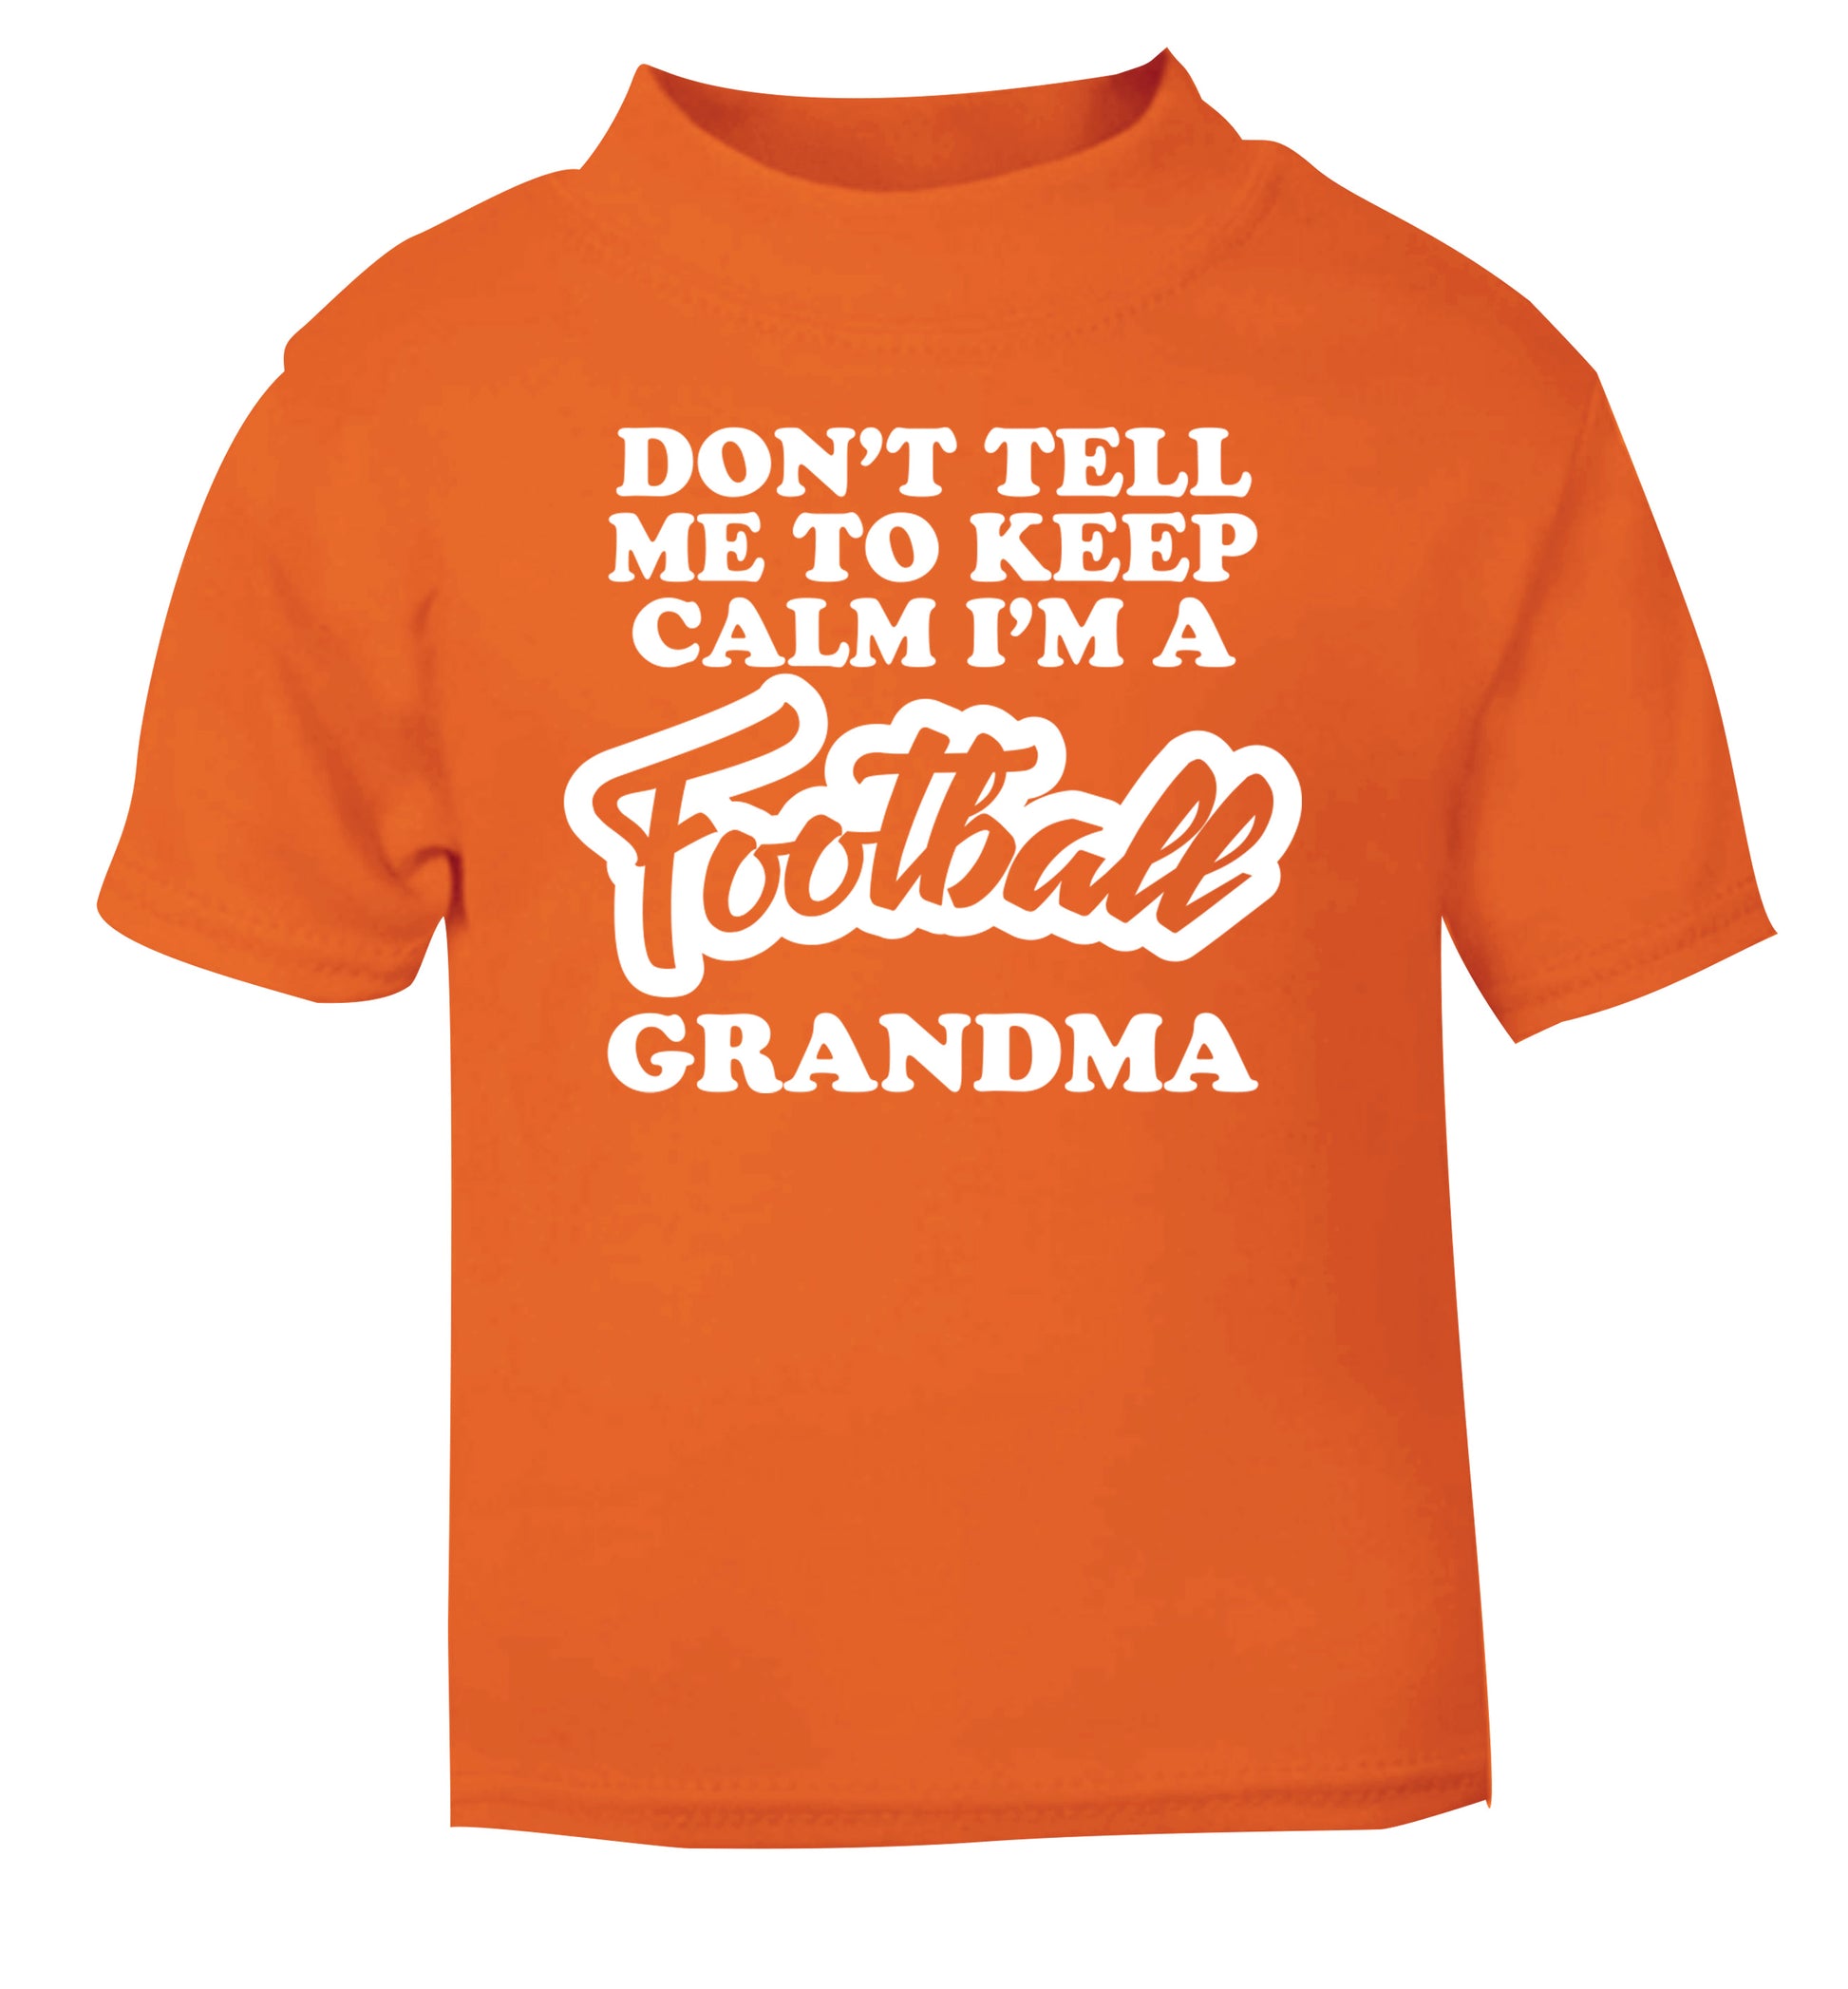 Don't tell me to keep calm I'm a football grandma orange Baby Toddler Tshirt 2 Years